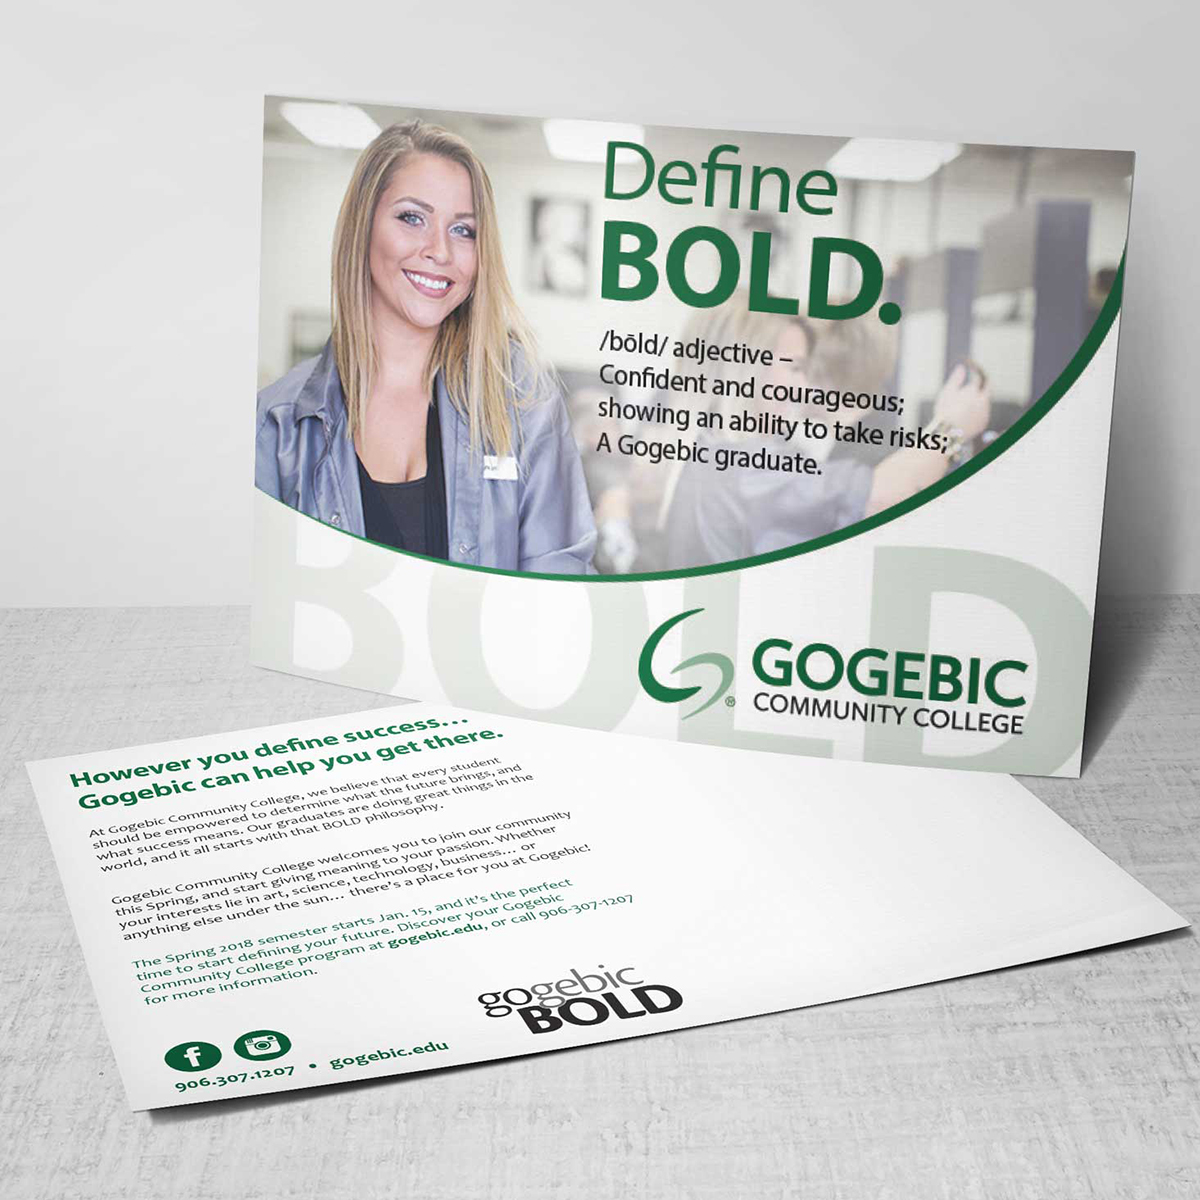 Gogebic Community College marketing example for print